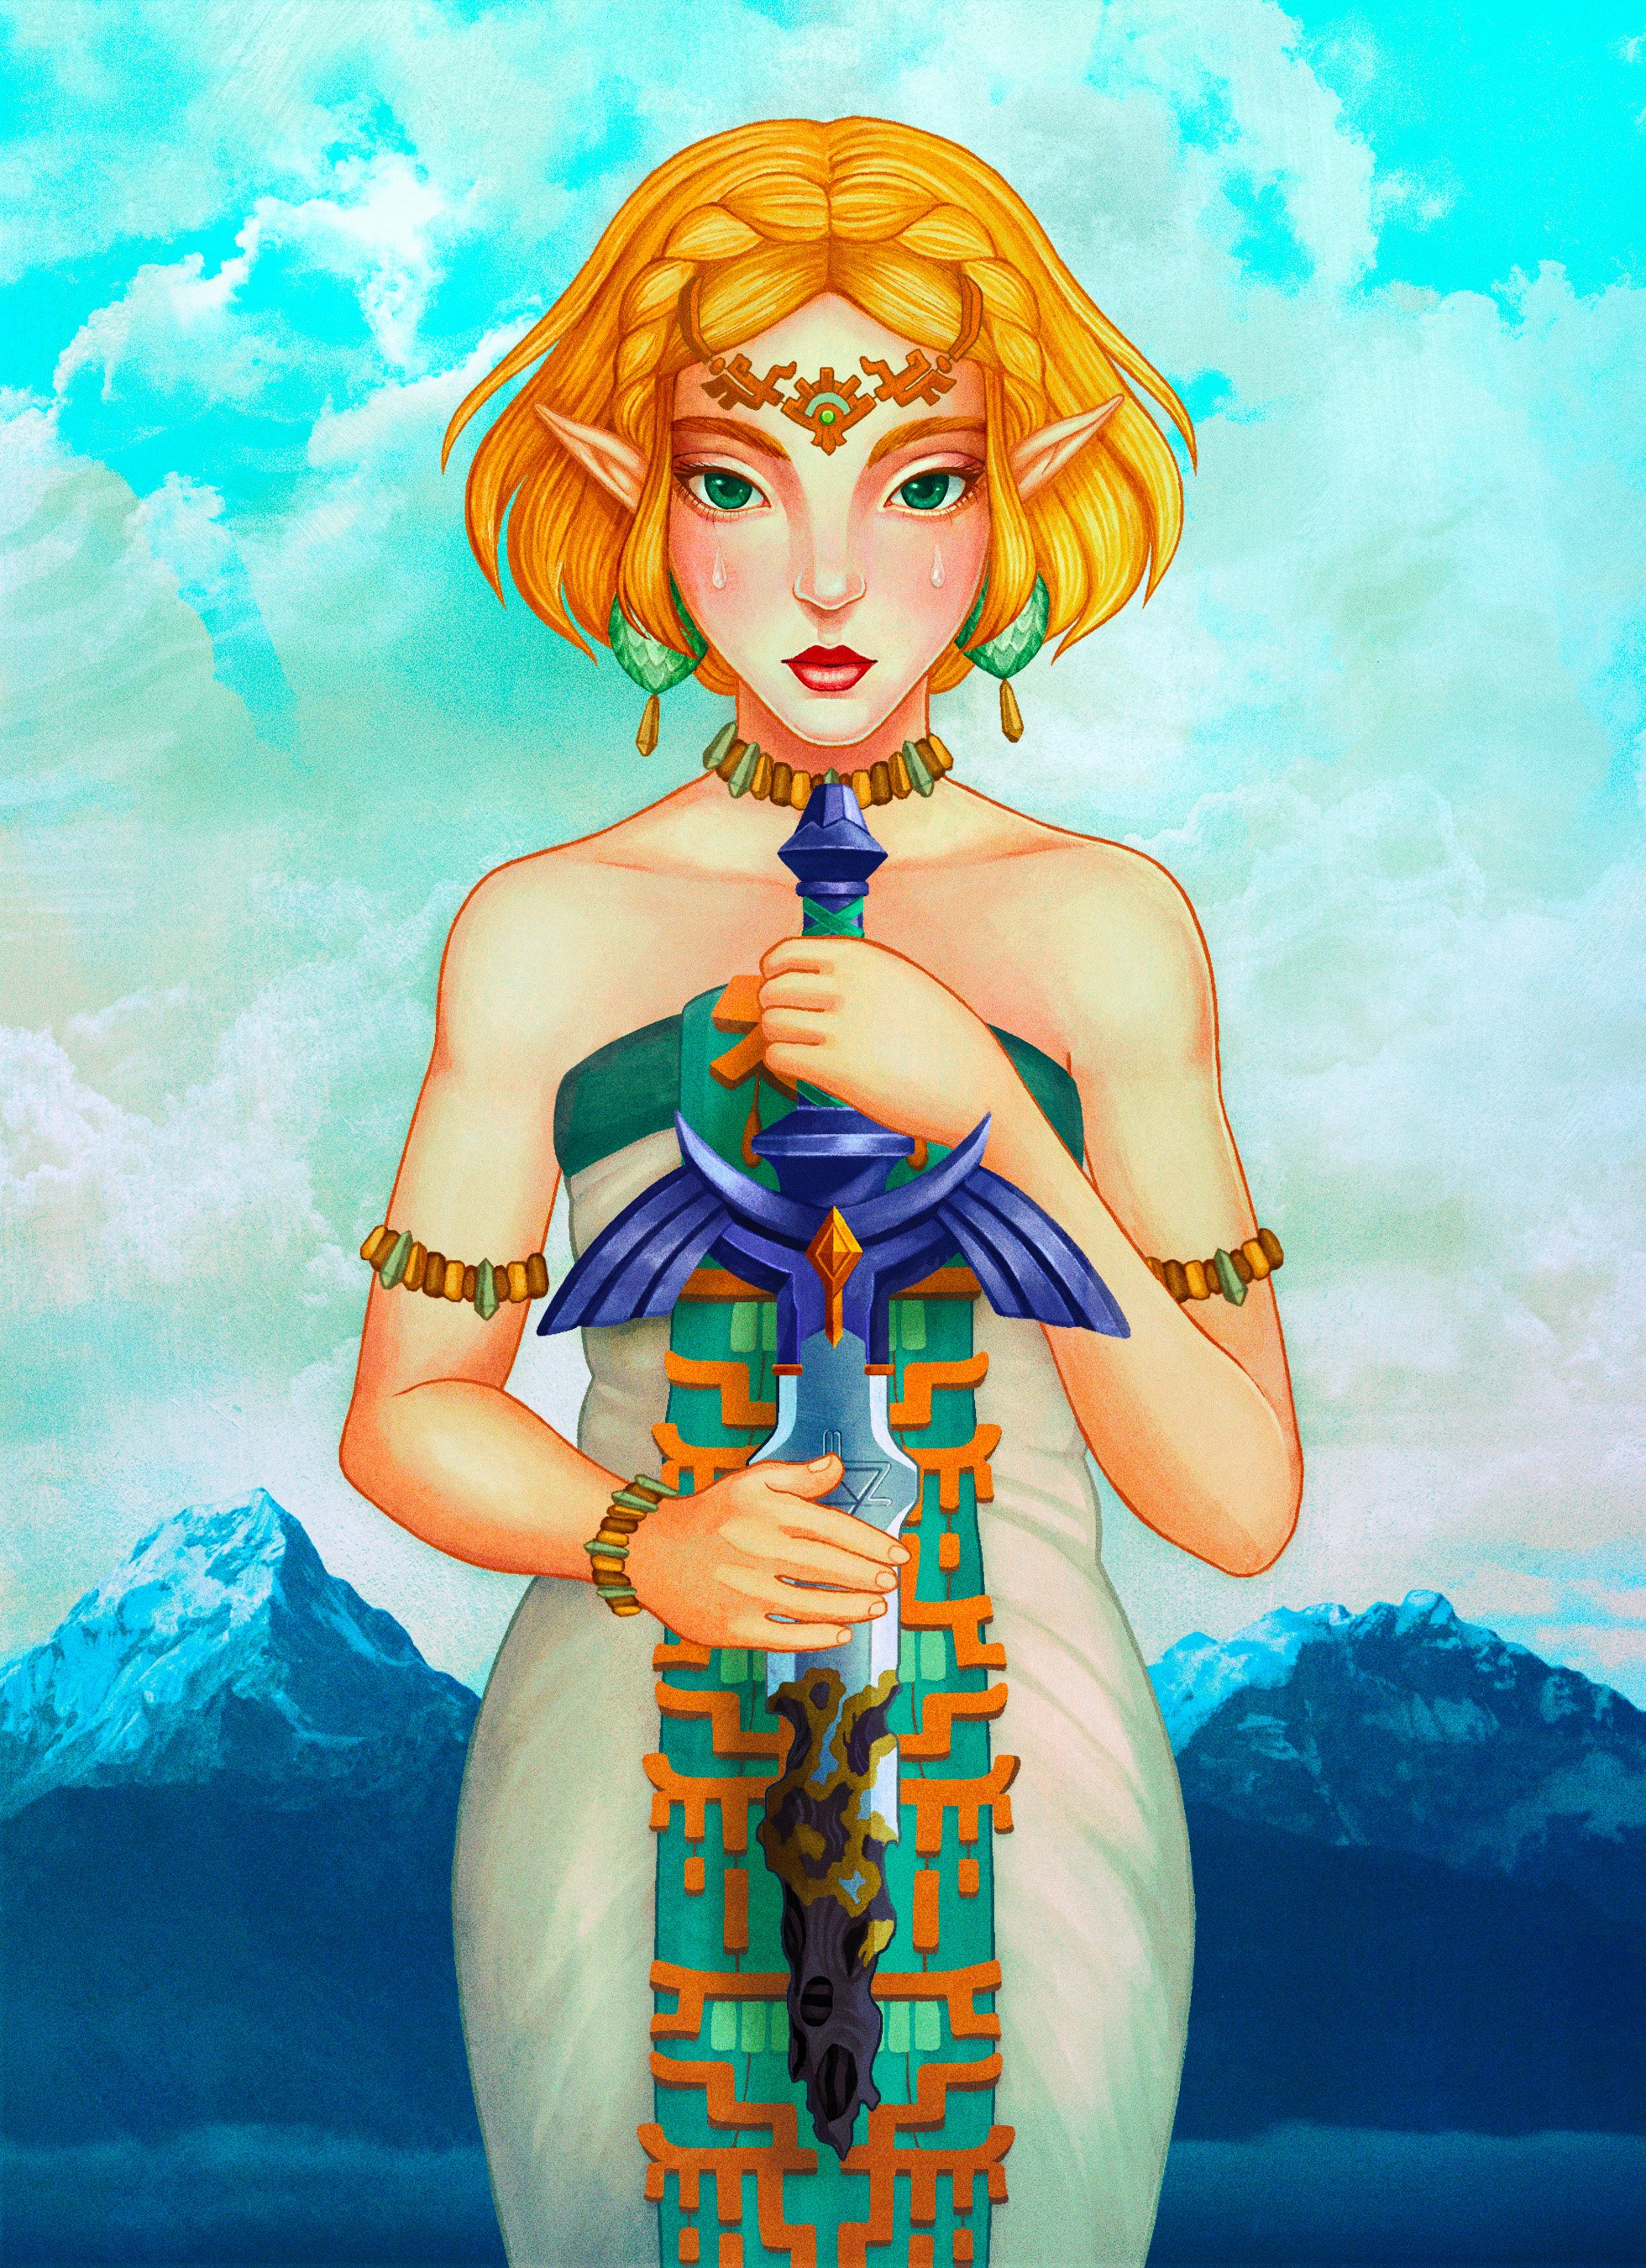 Zelda_illustration_01.jpg